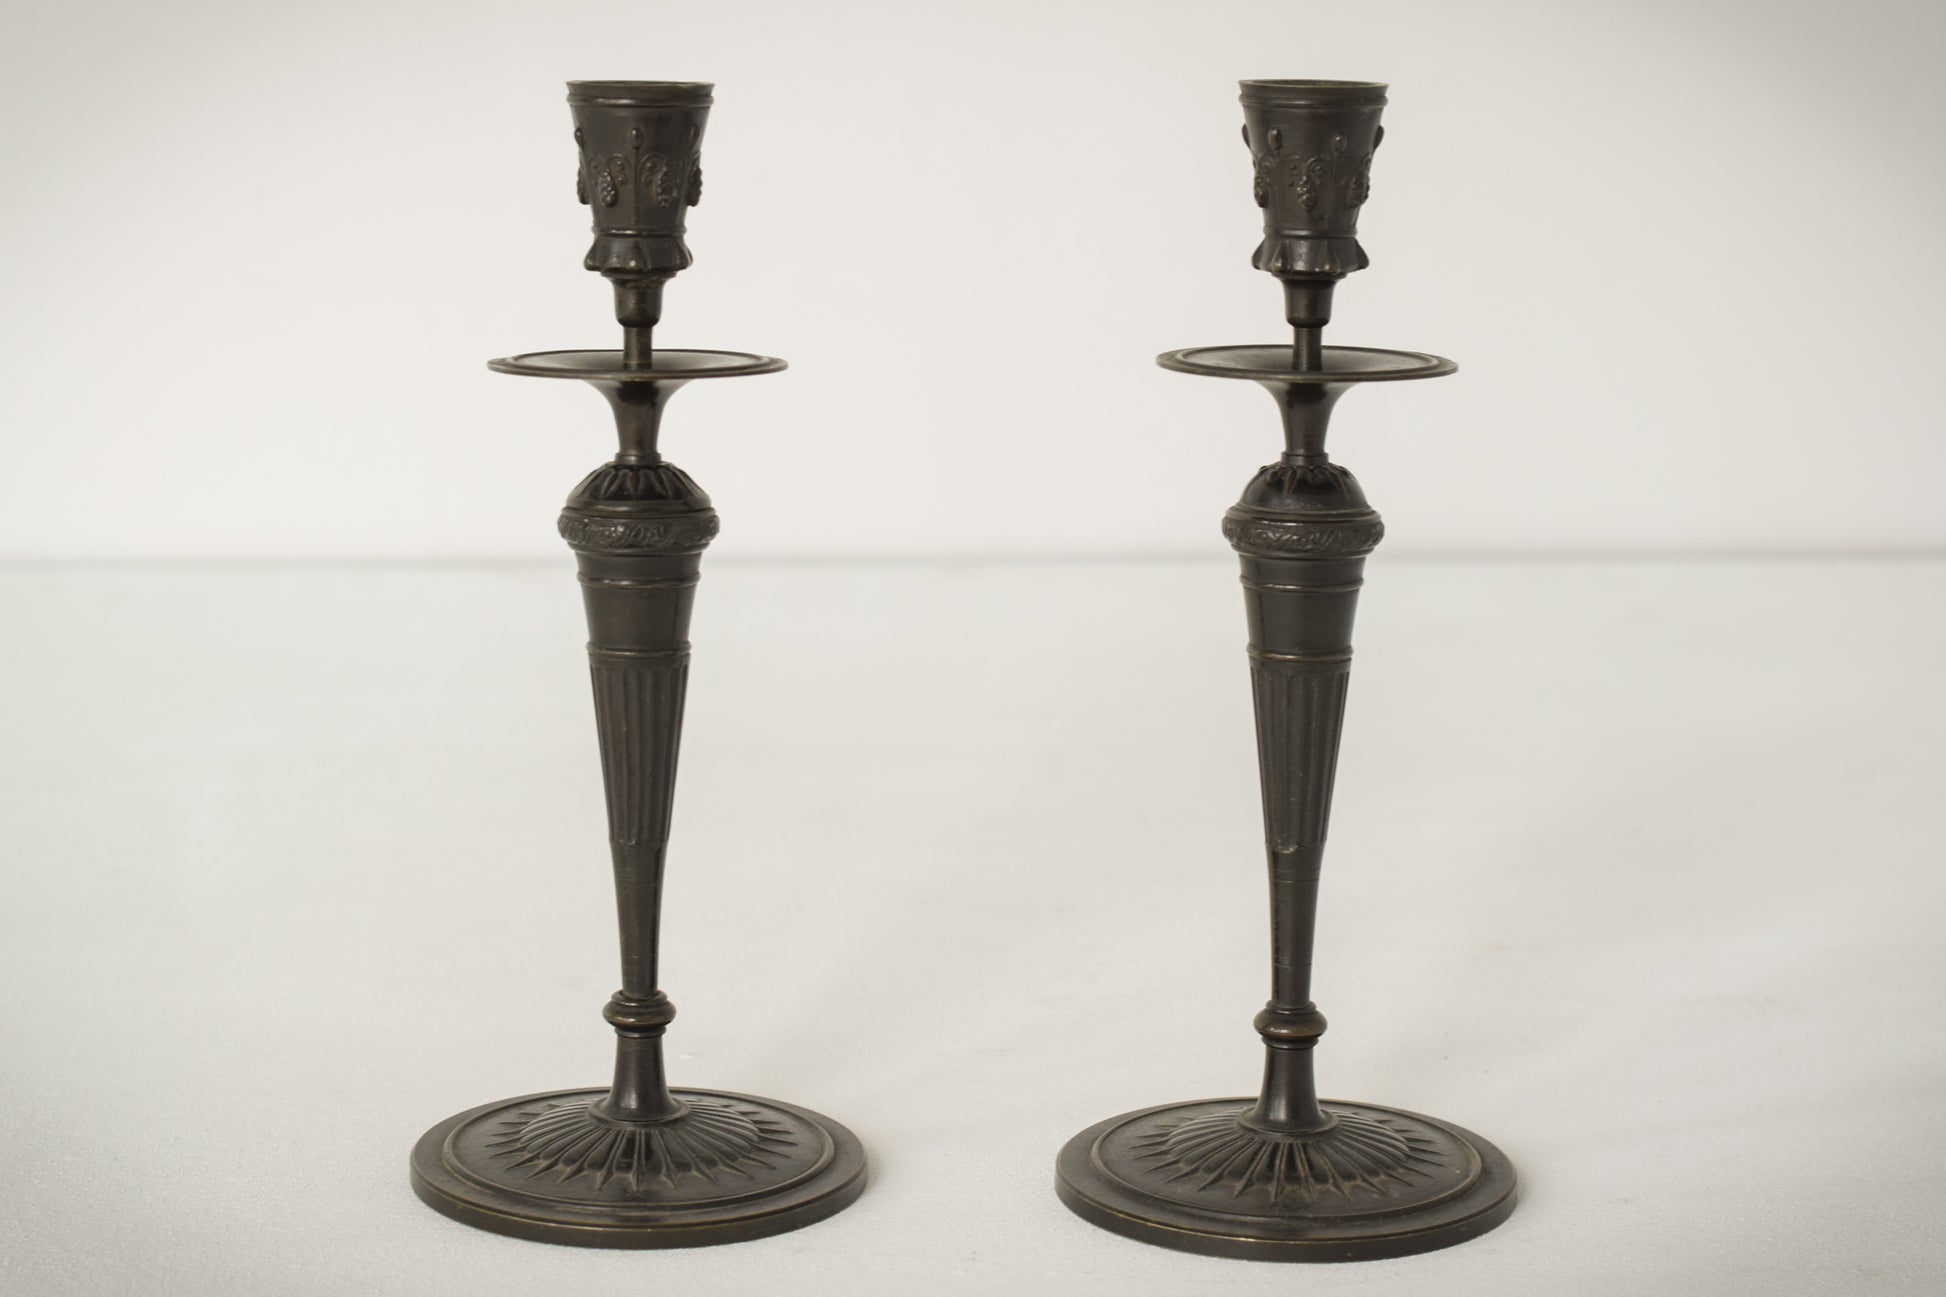 A Classic Pair of Bronze Candlesticks